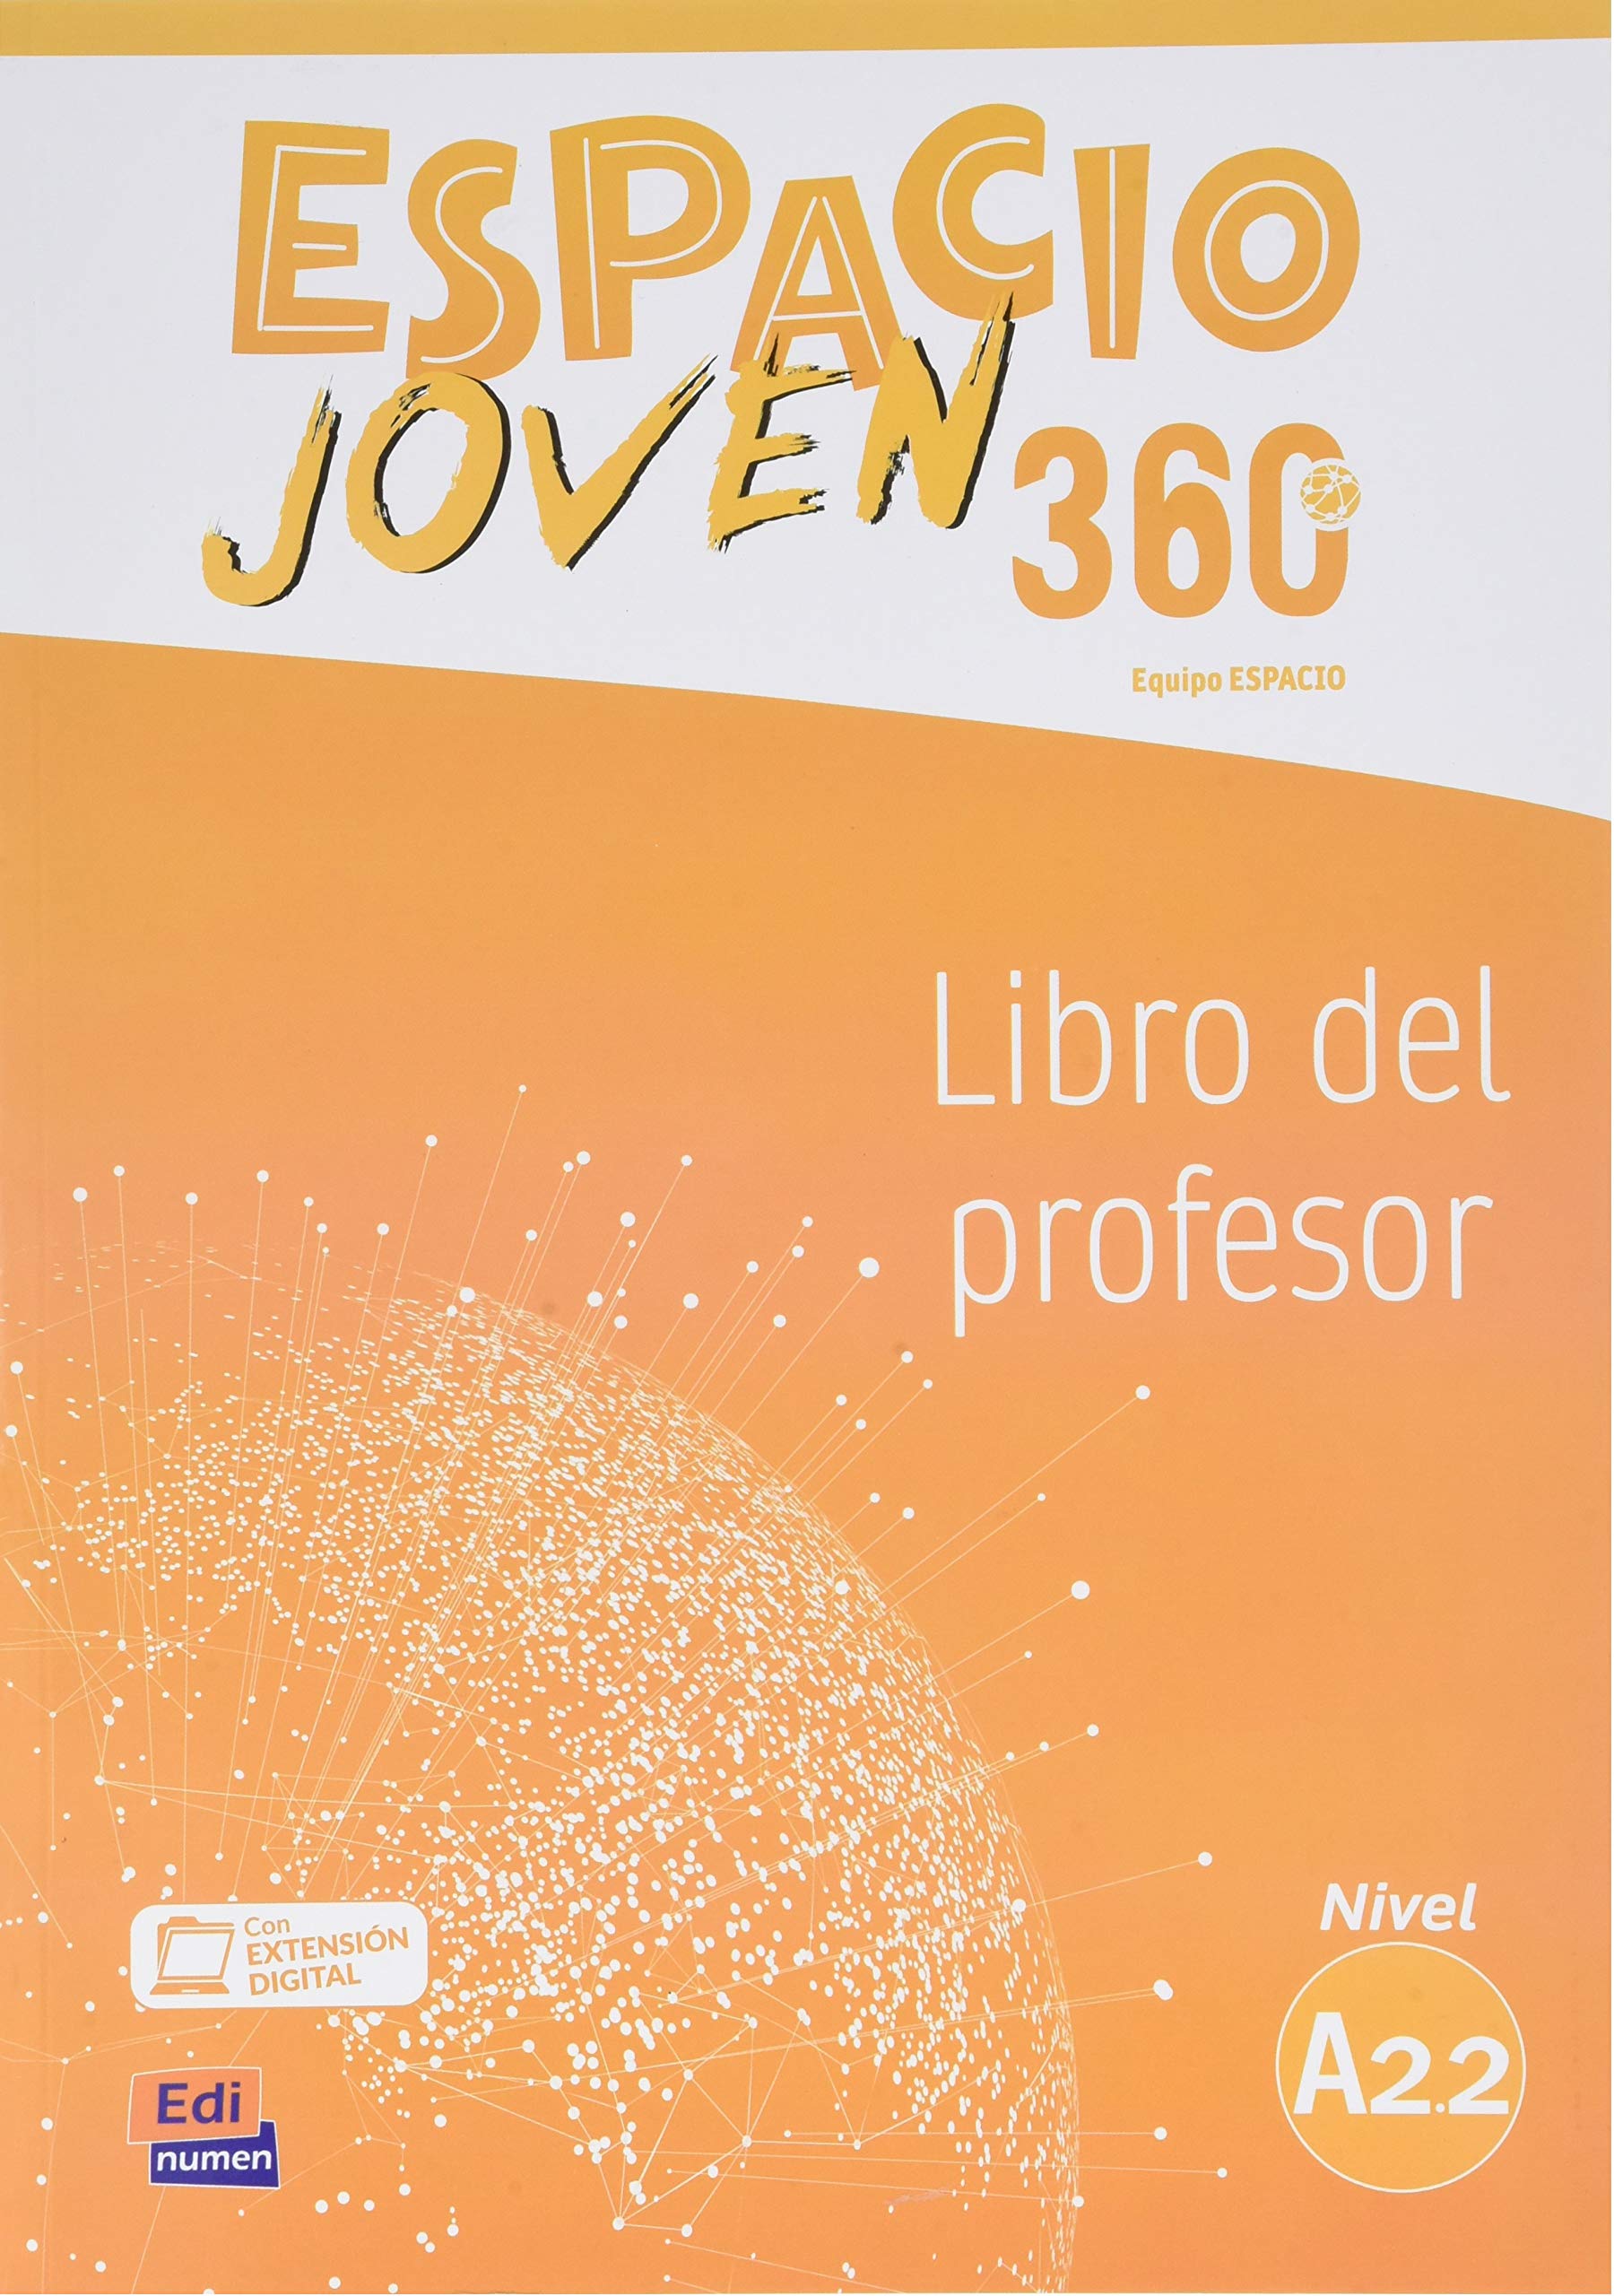 ESPACIO JOVEN 360 Nivel A 2.2 Libro del profesor